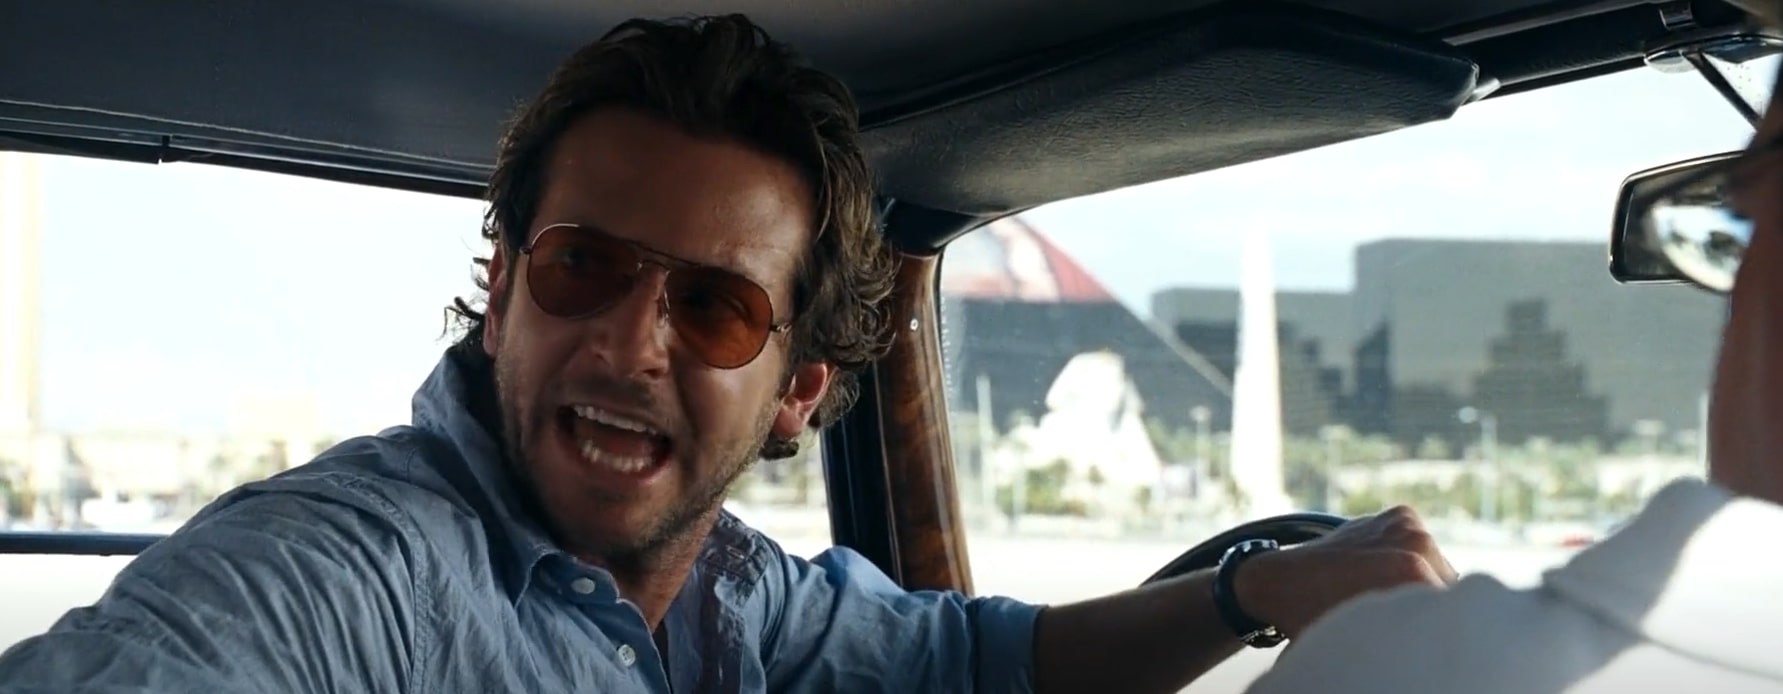 Bradley Cooper’s The Hangover Sunglasses – Like a Film Star